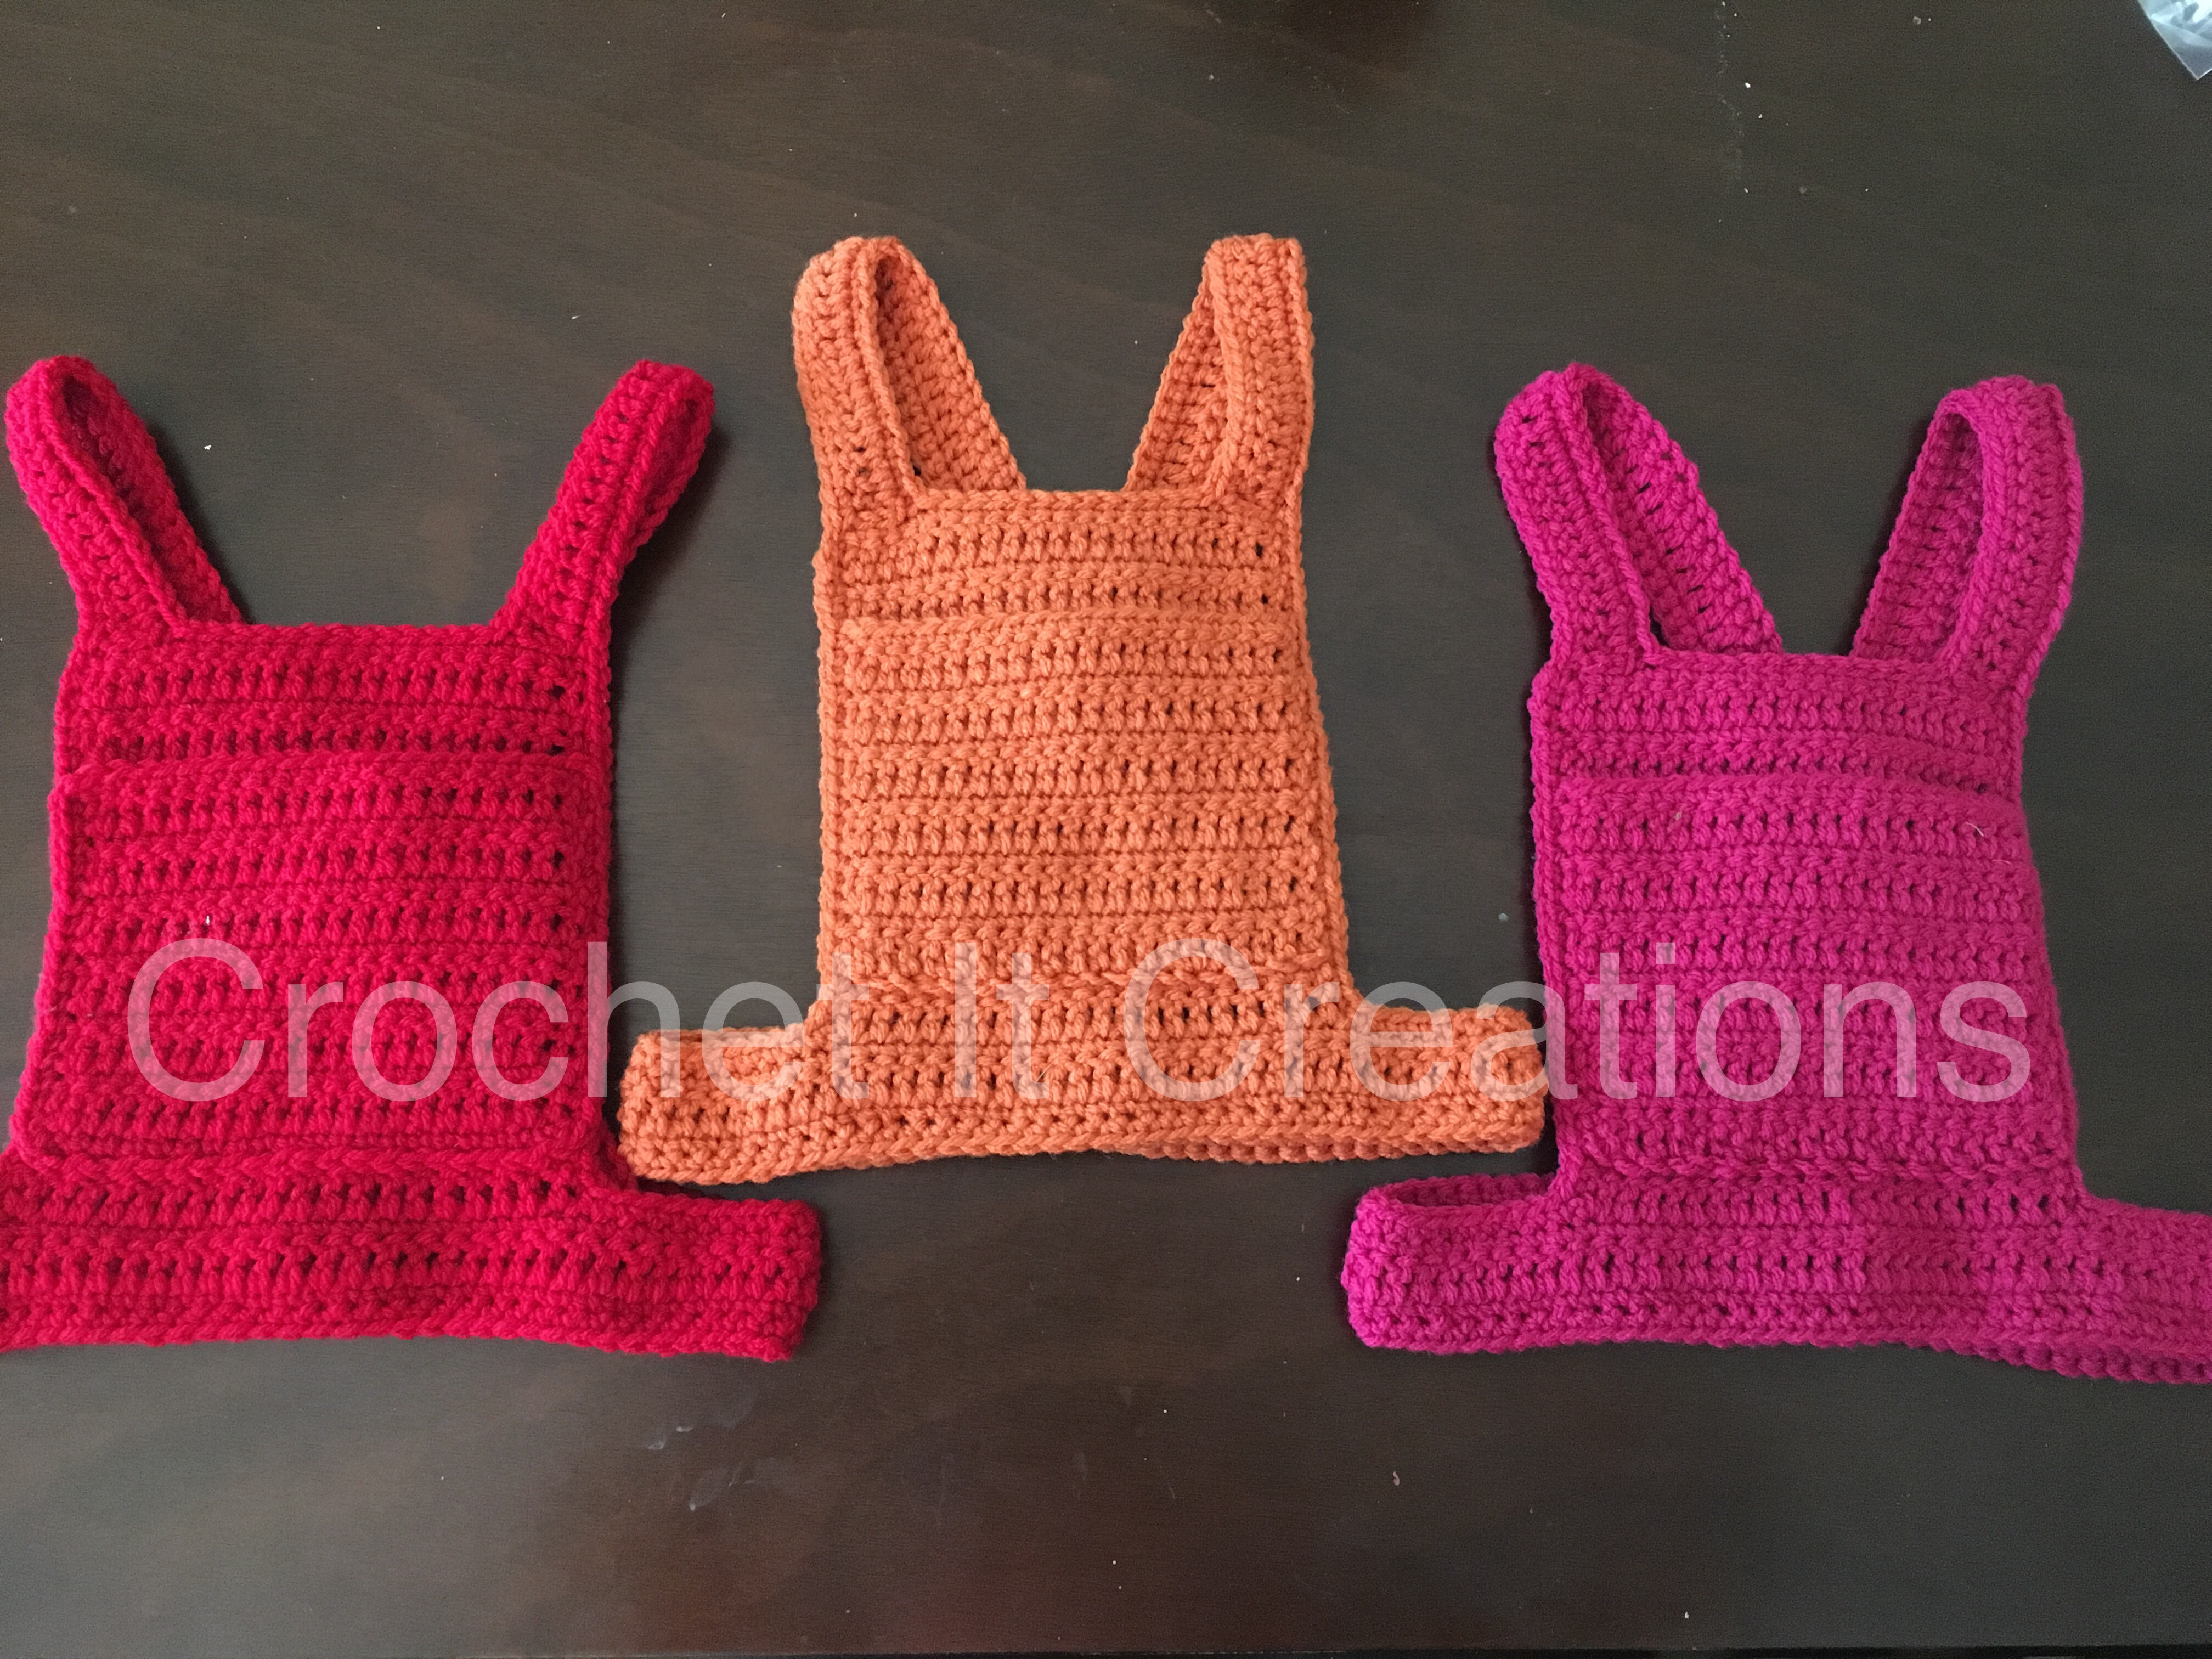 crochet baby sling pattern